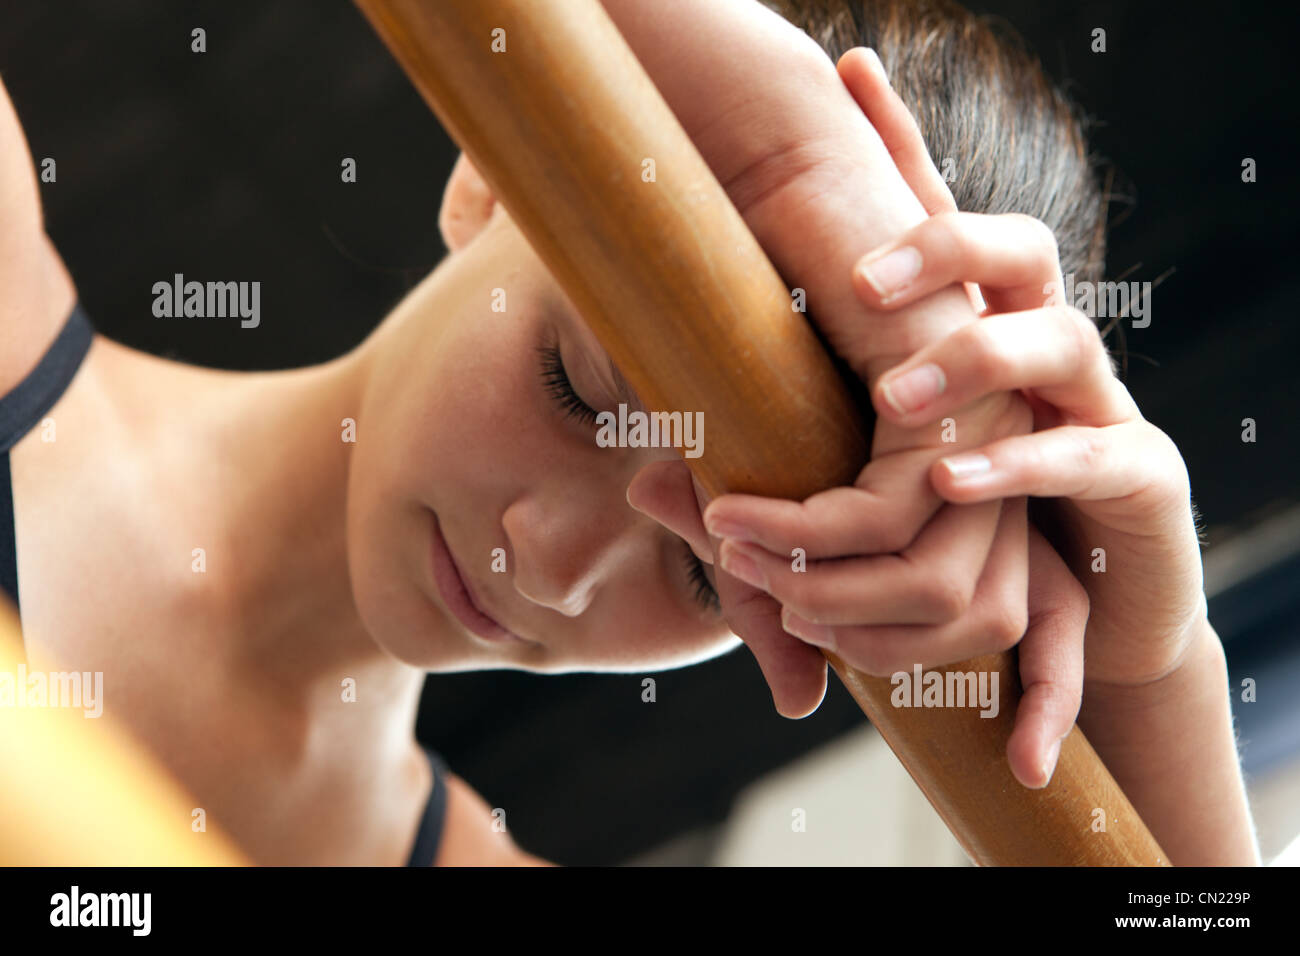 Ballet dancer leaning on bar, eyes closed Stock Photo